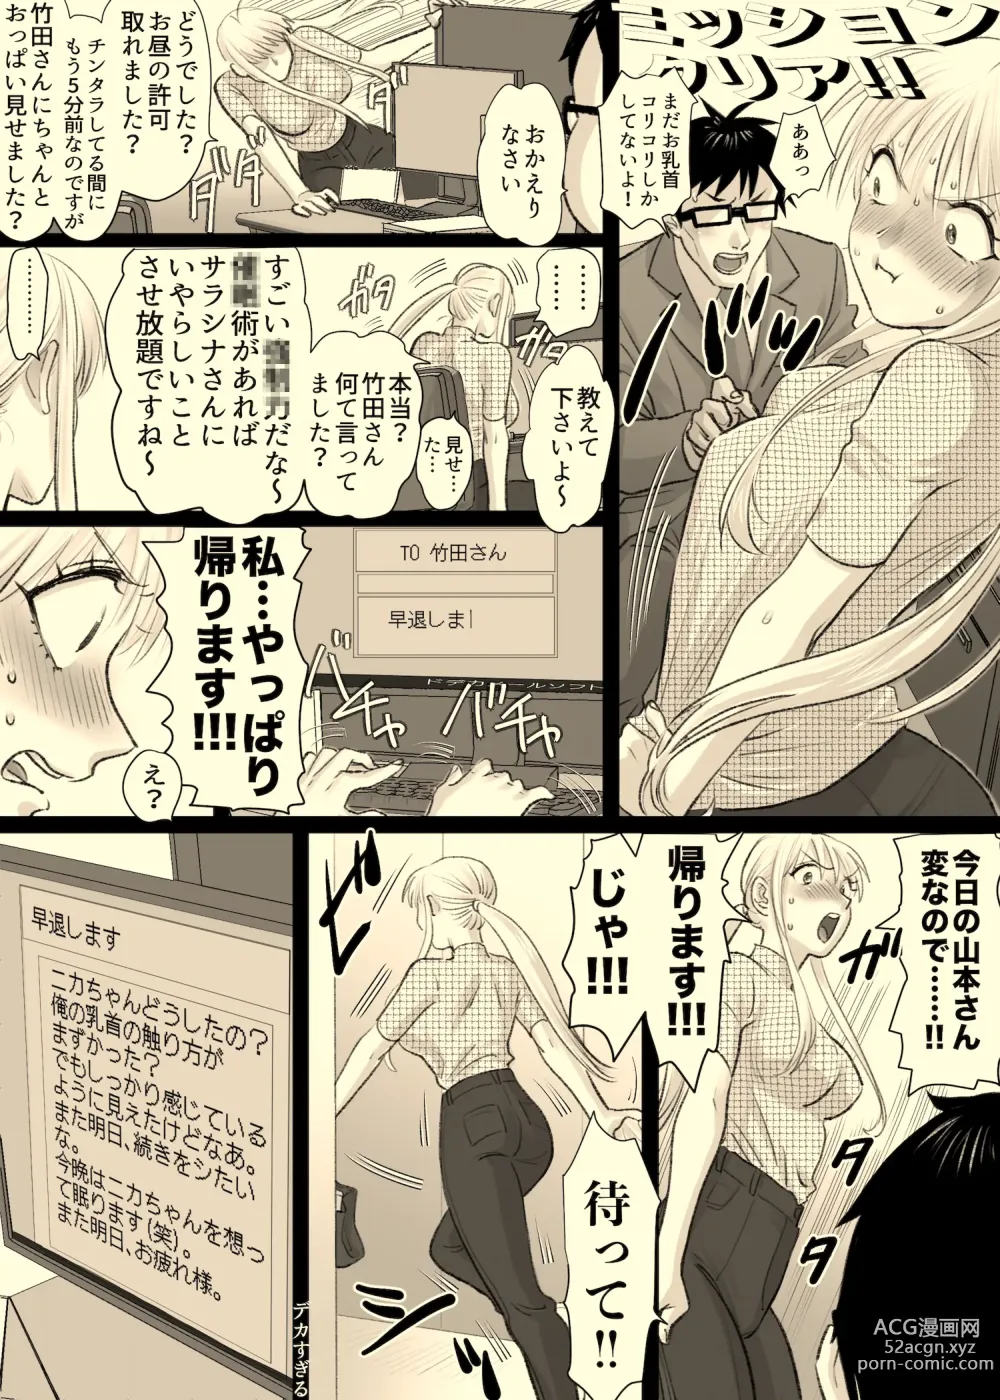 Page 5 of doujinshi Hi Genjitsu